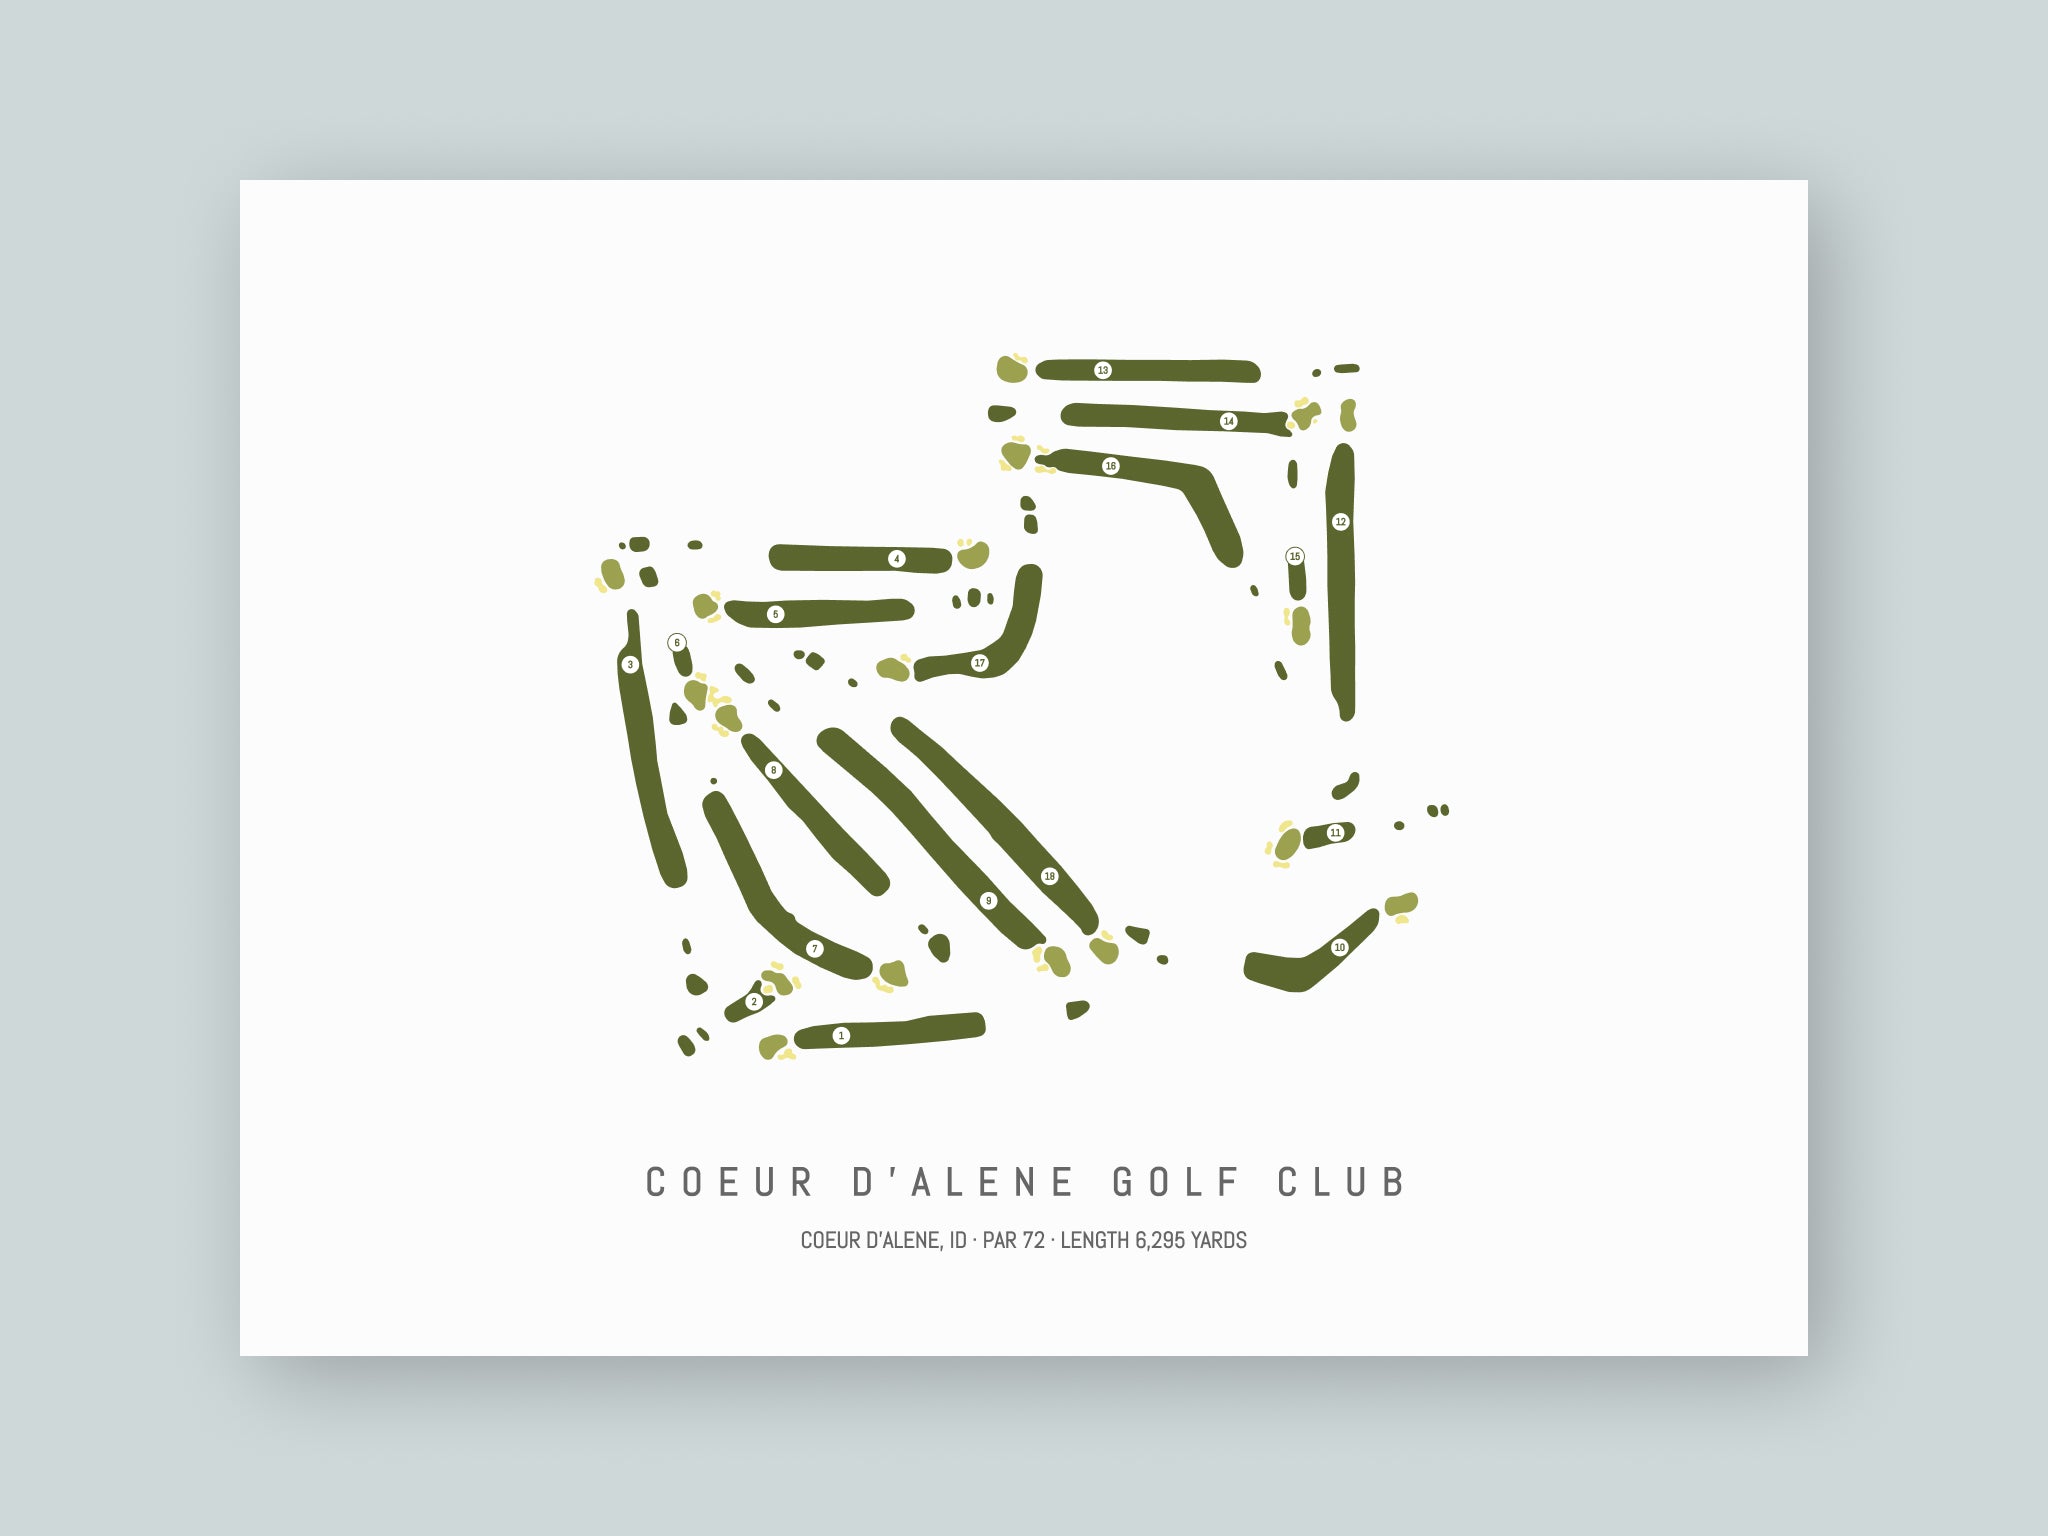 Coeur d'Alene Golf Club